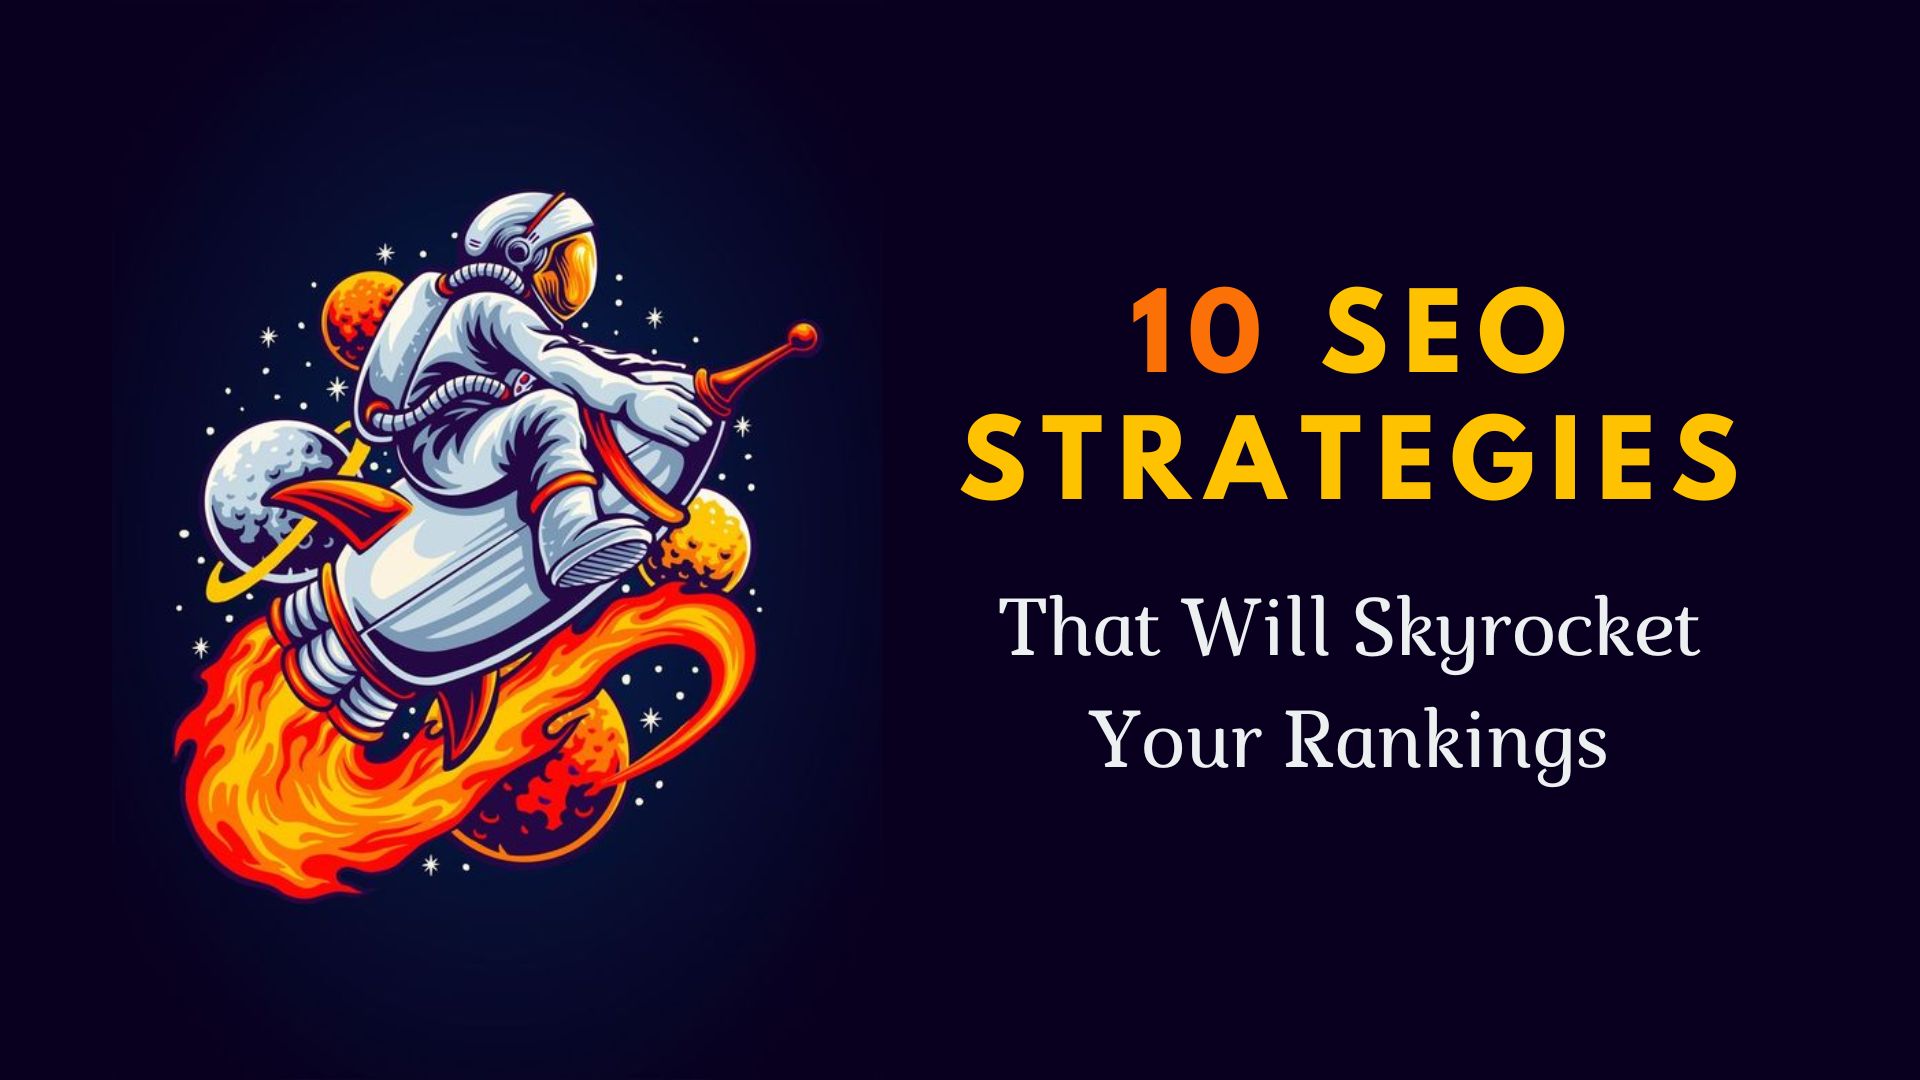 10 SEO Strategies That Will Skyrocket Your Rankings